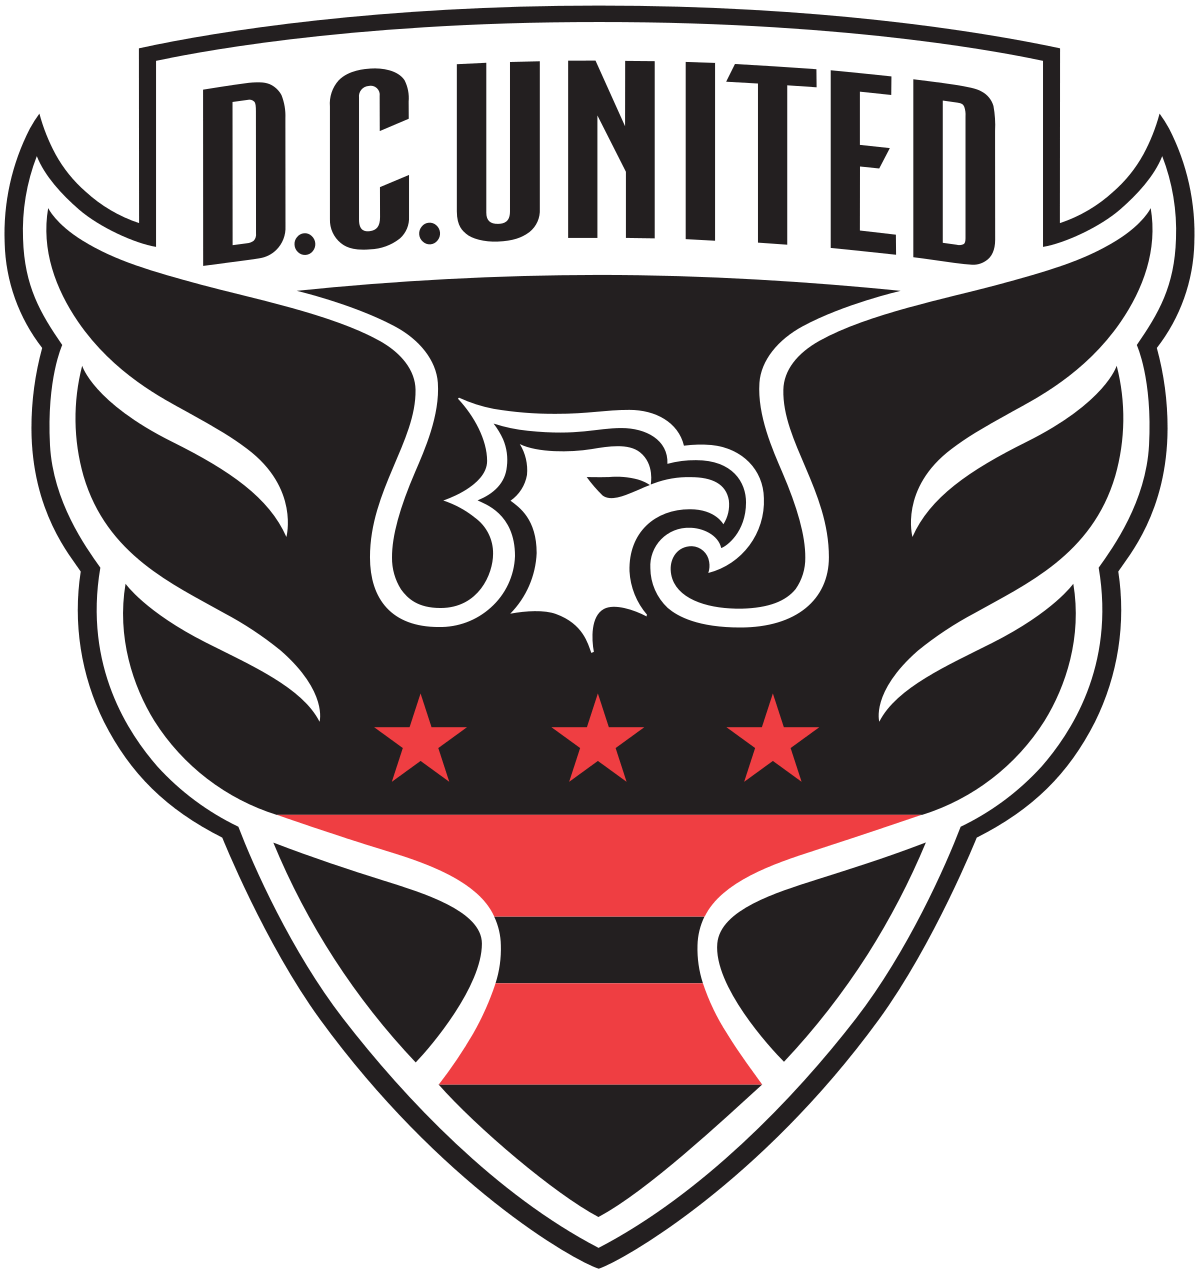 Red and White Soccer Logo - D.C. United